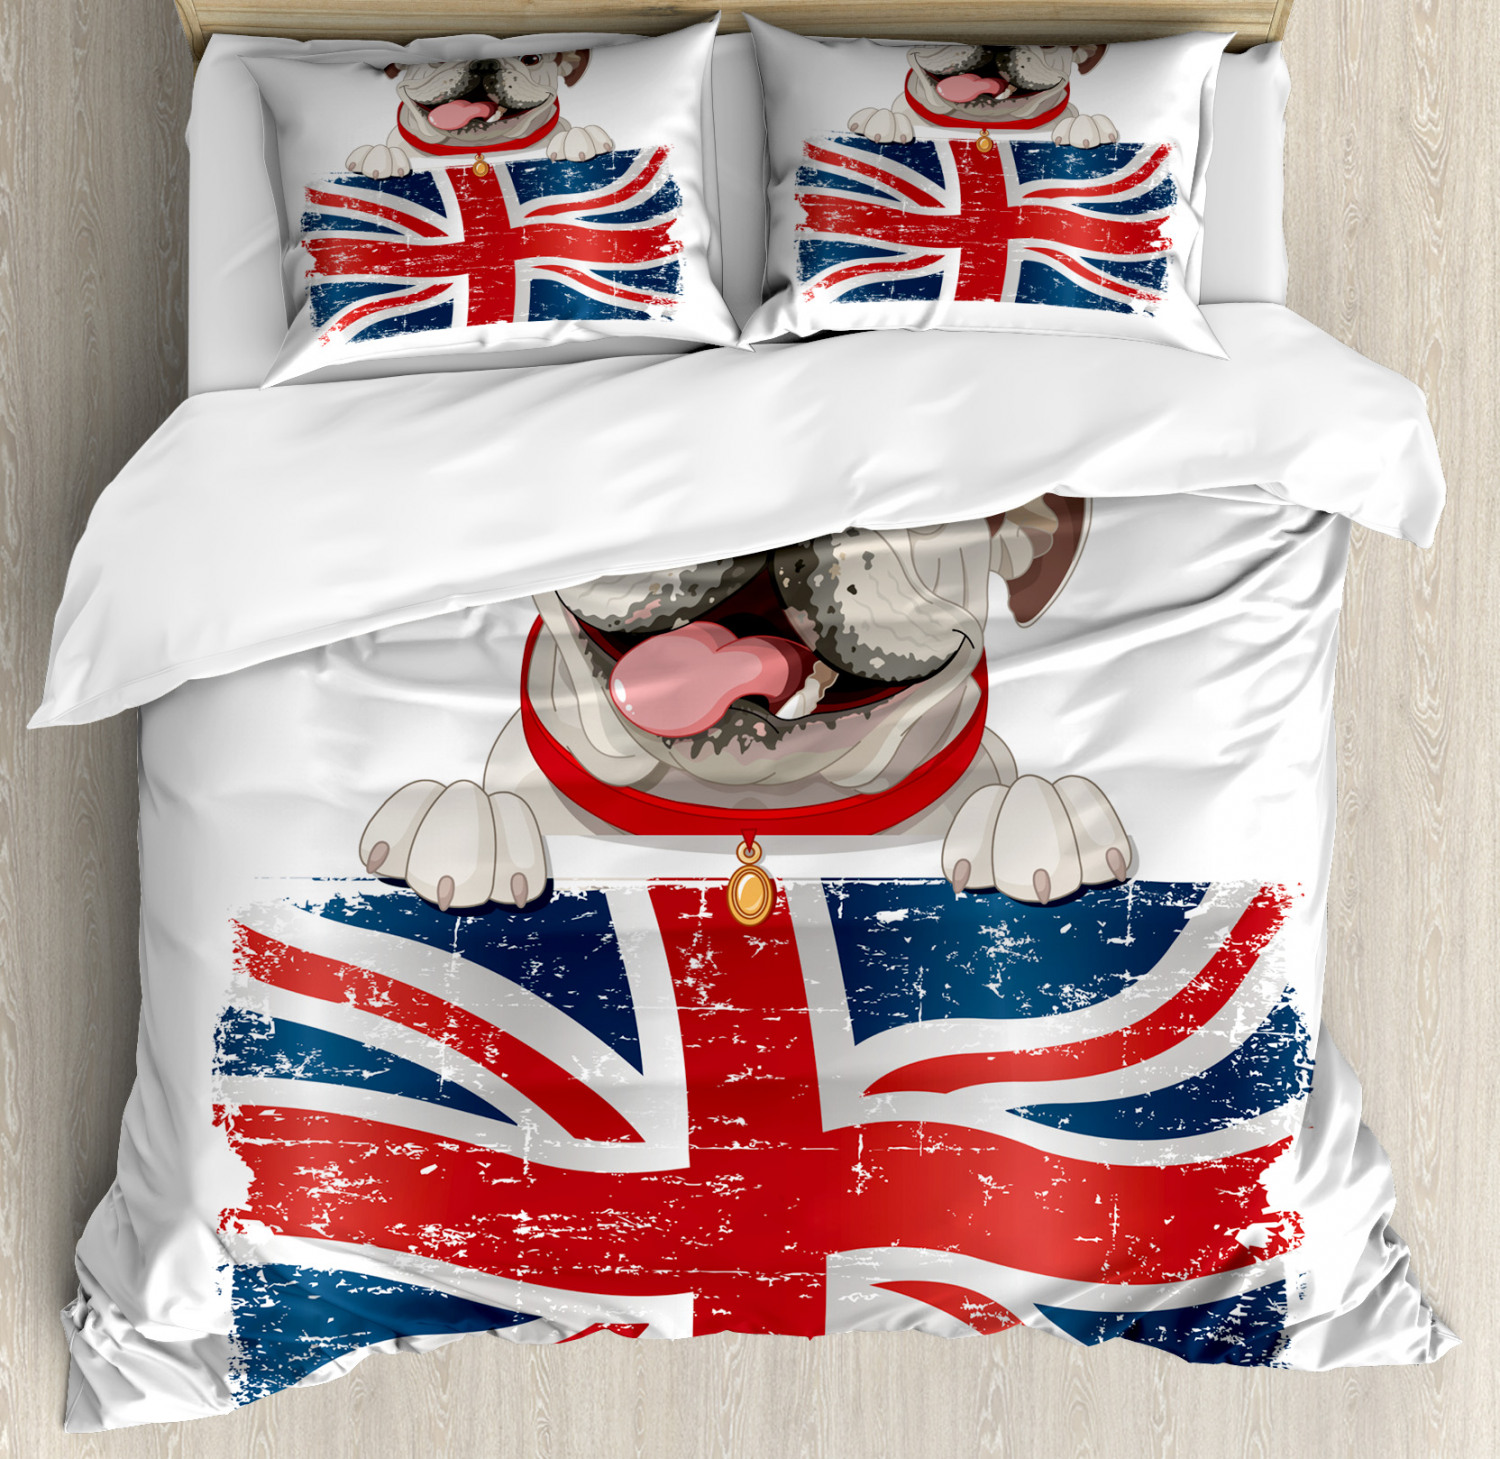 English Bulldog Duvet Cover Set With Pillow Shams British Dog Print